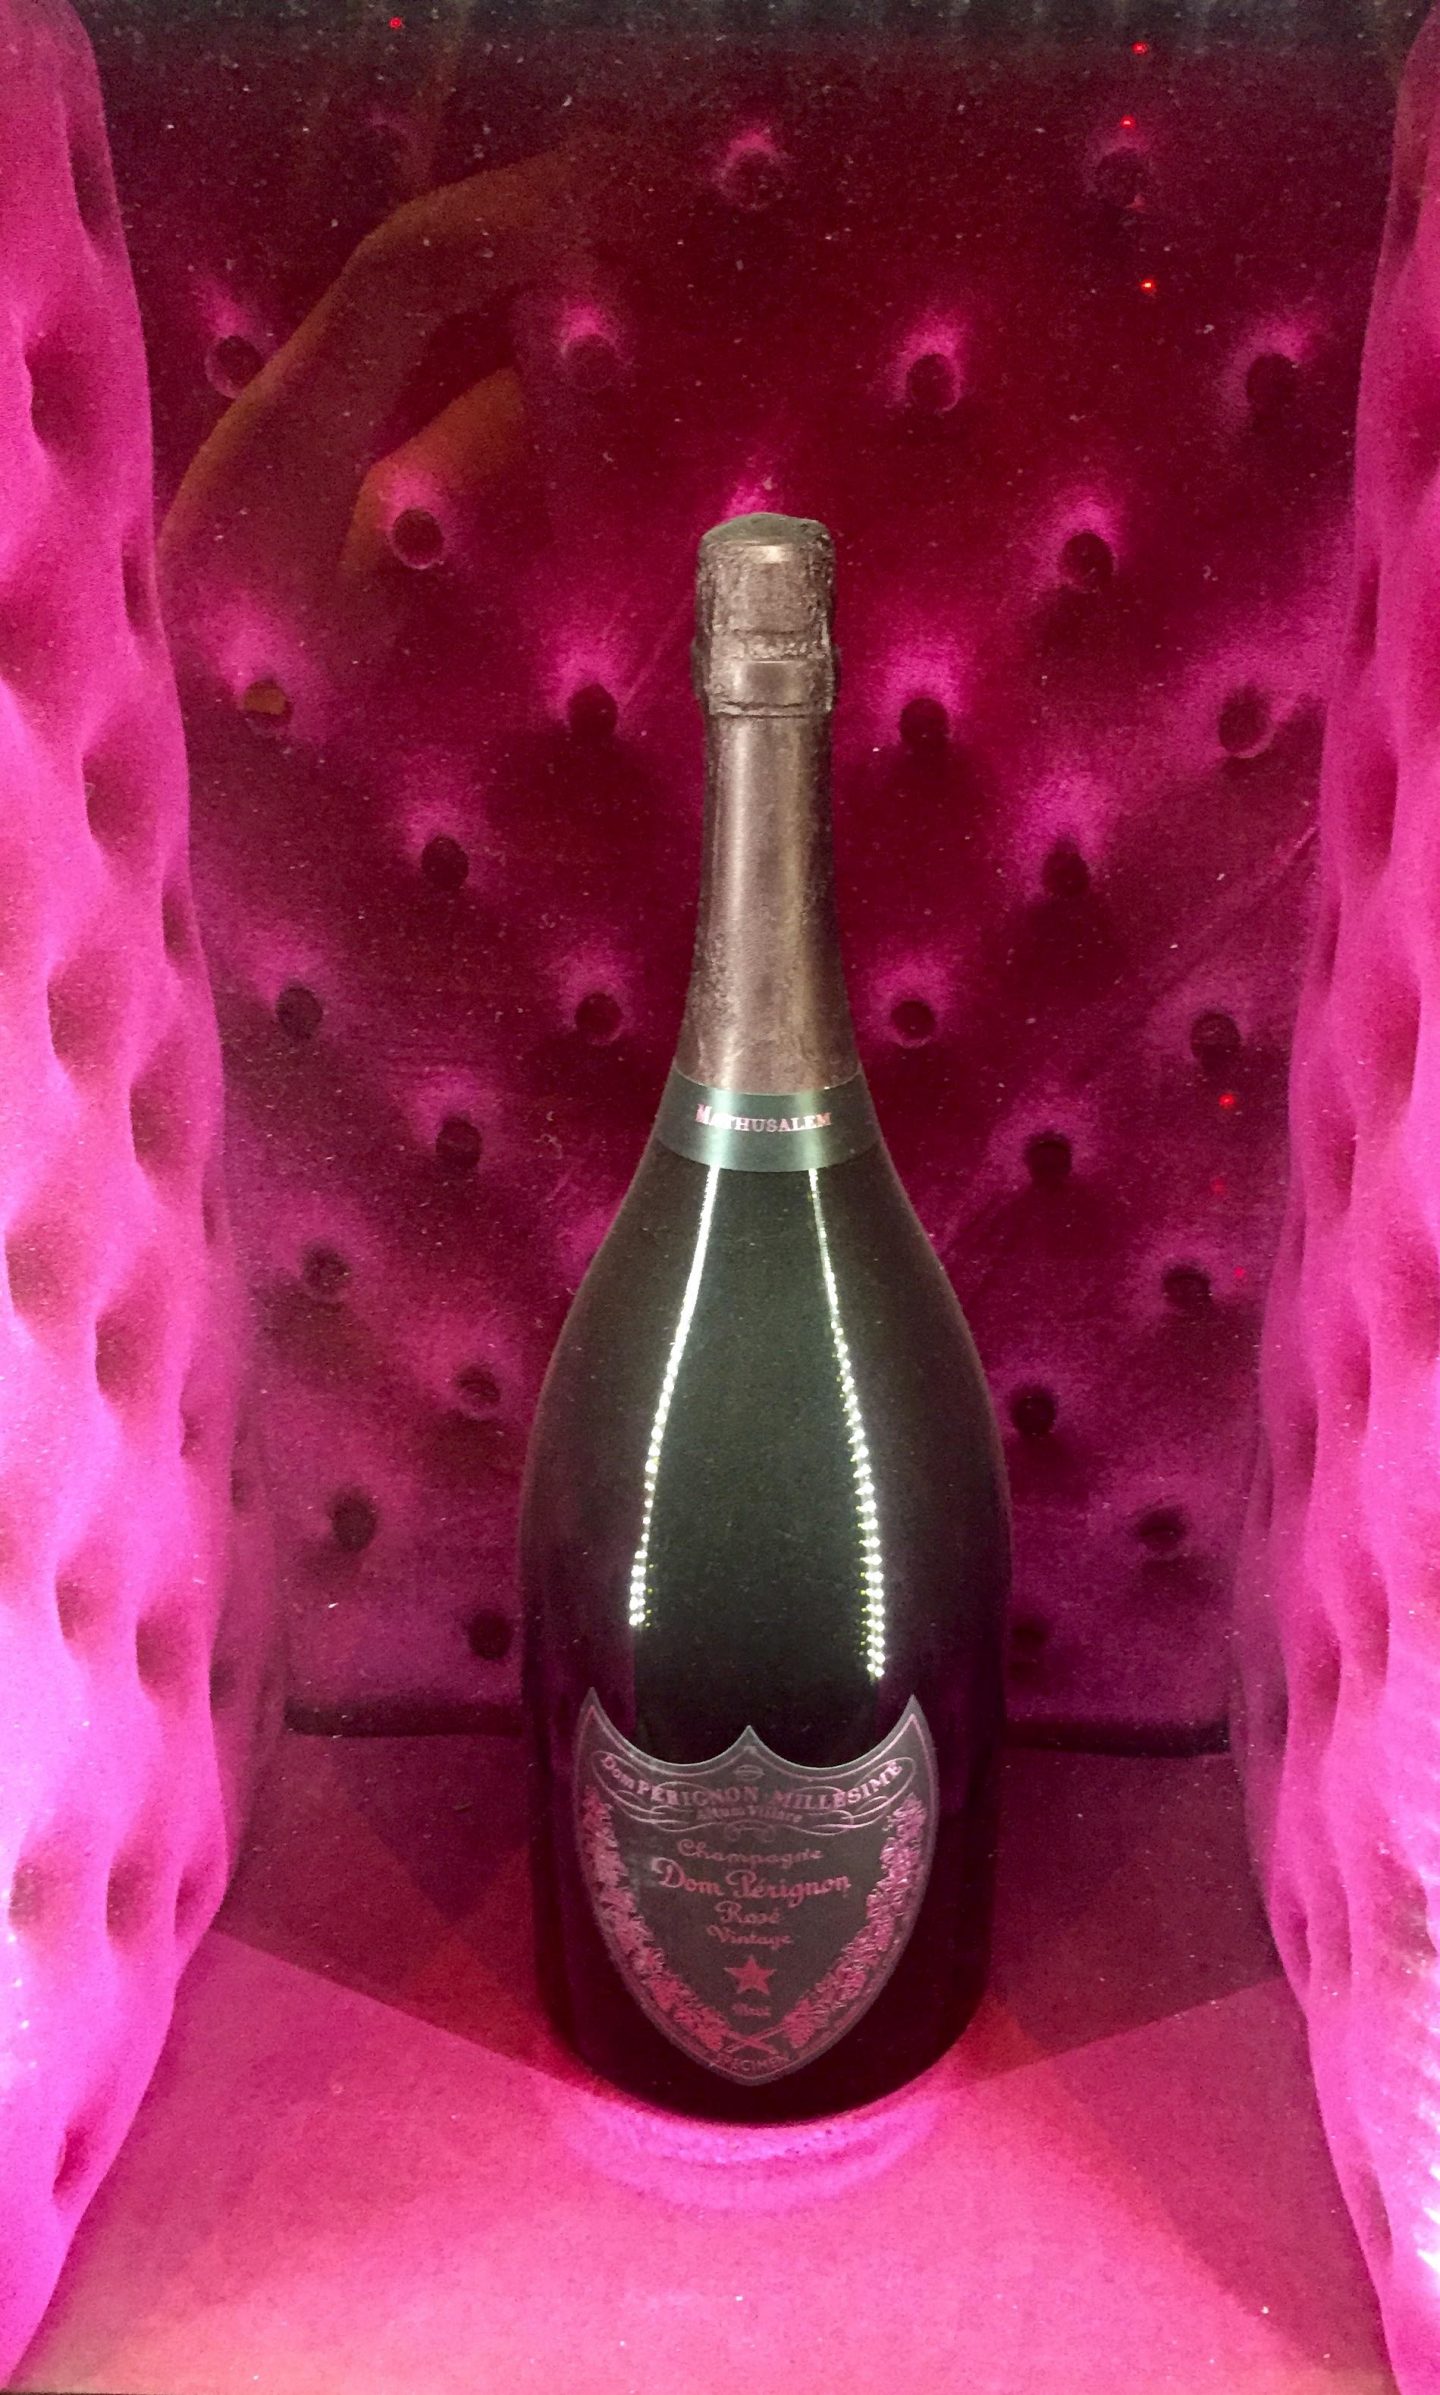 Vintage champagne in Barcelona